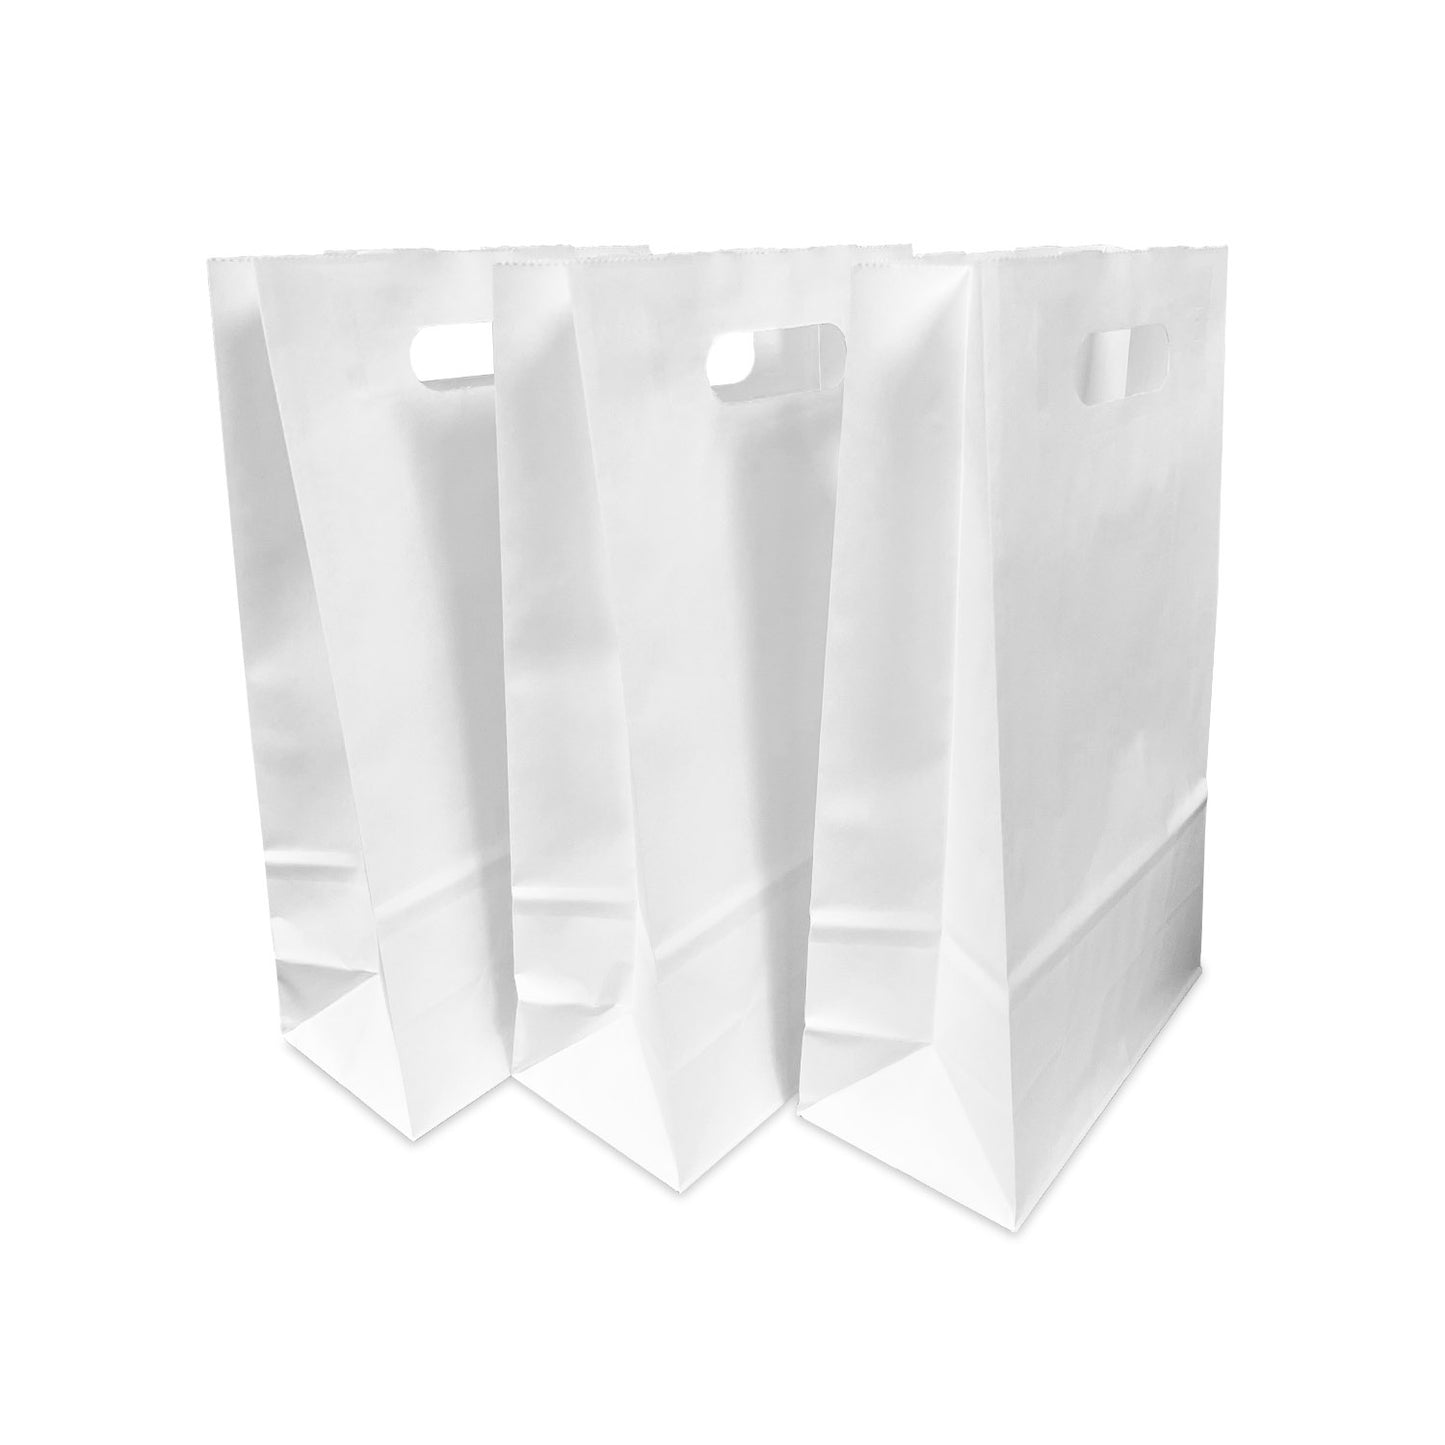 250pcs, Pub, 8x4x13 5/8 inches, White Paper Bags, with Die Cut Handles